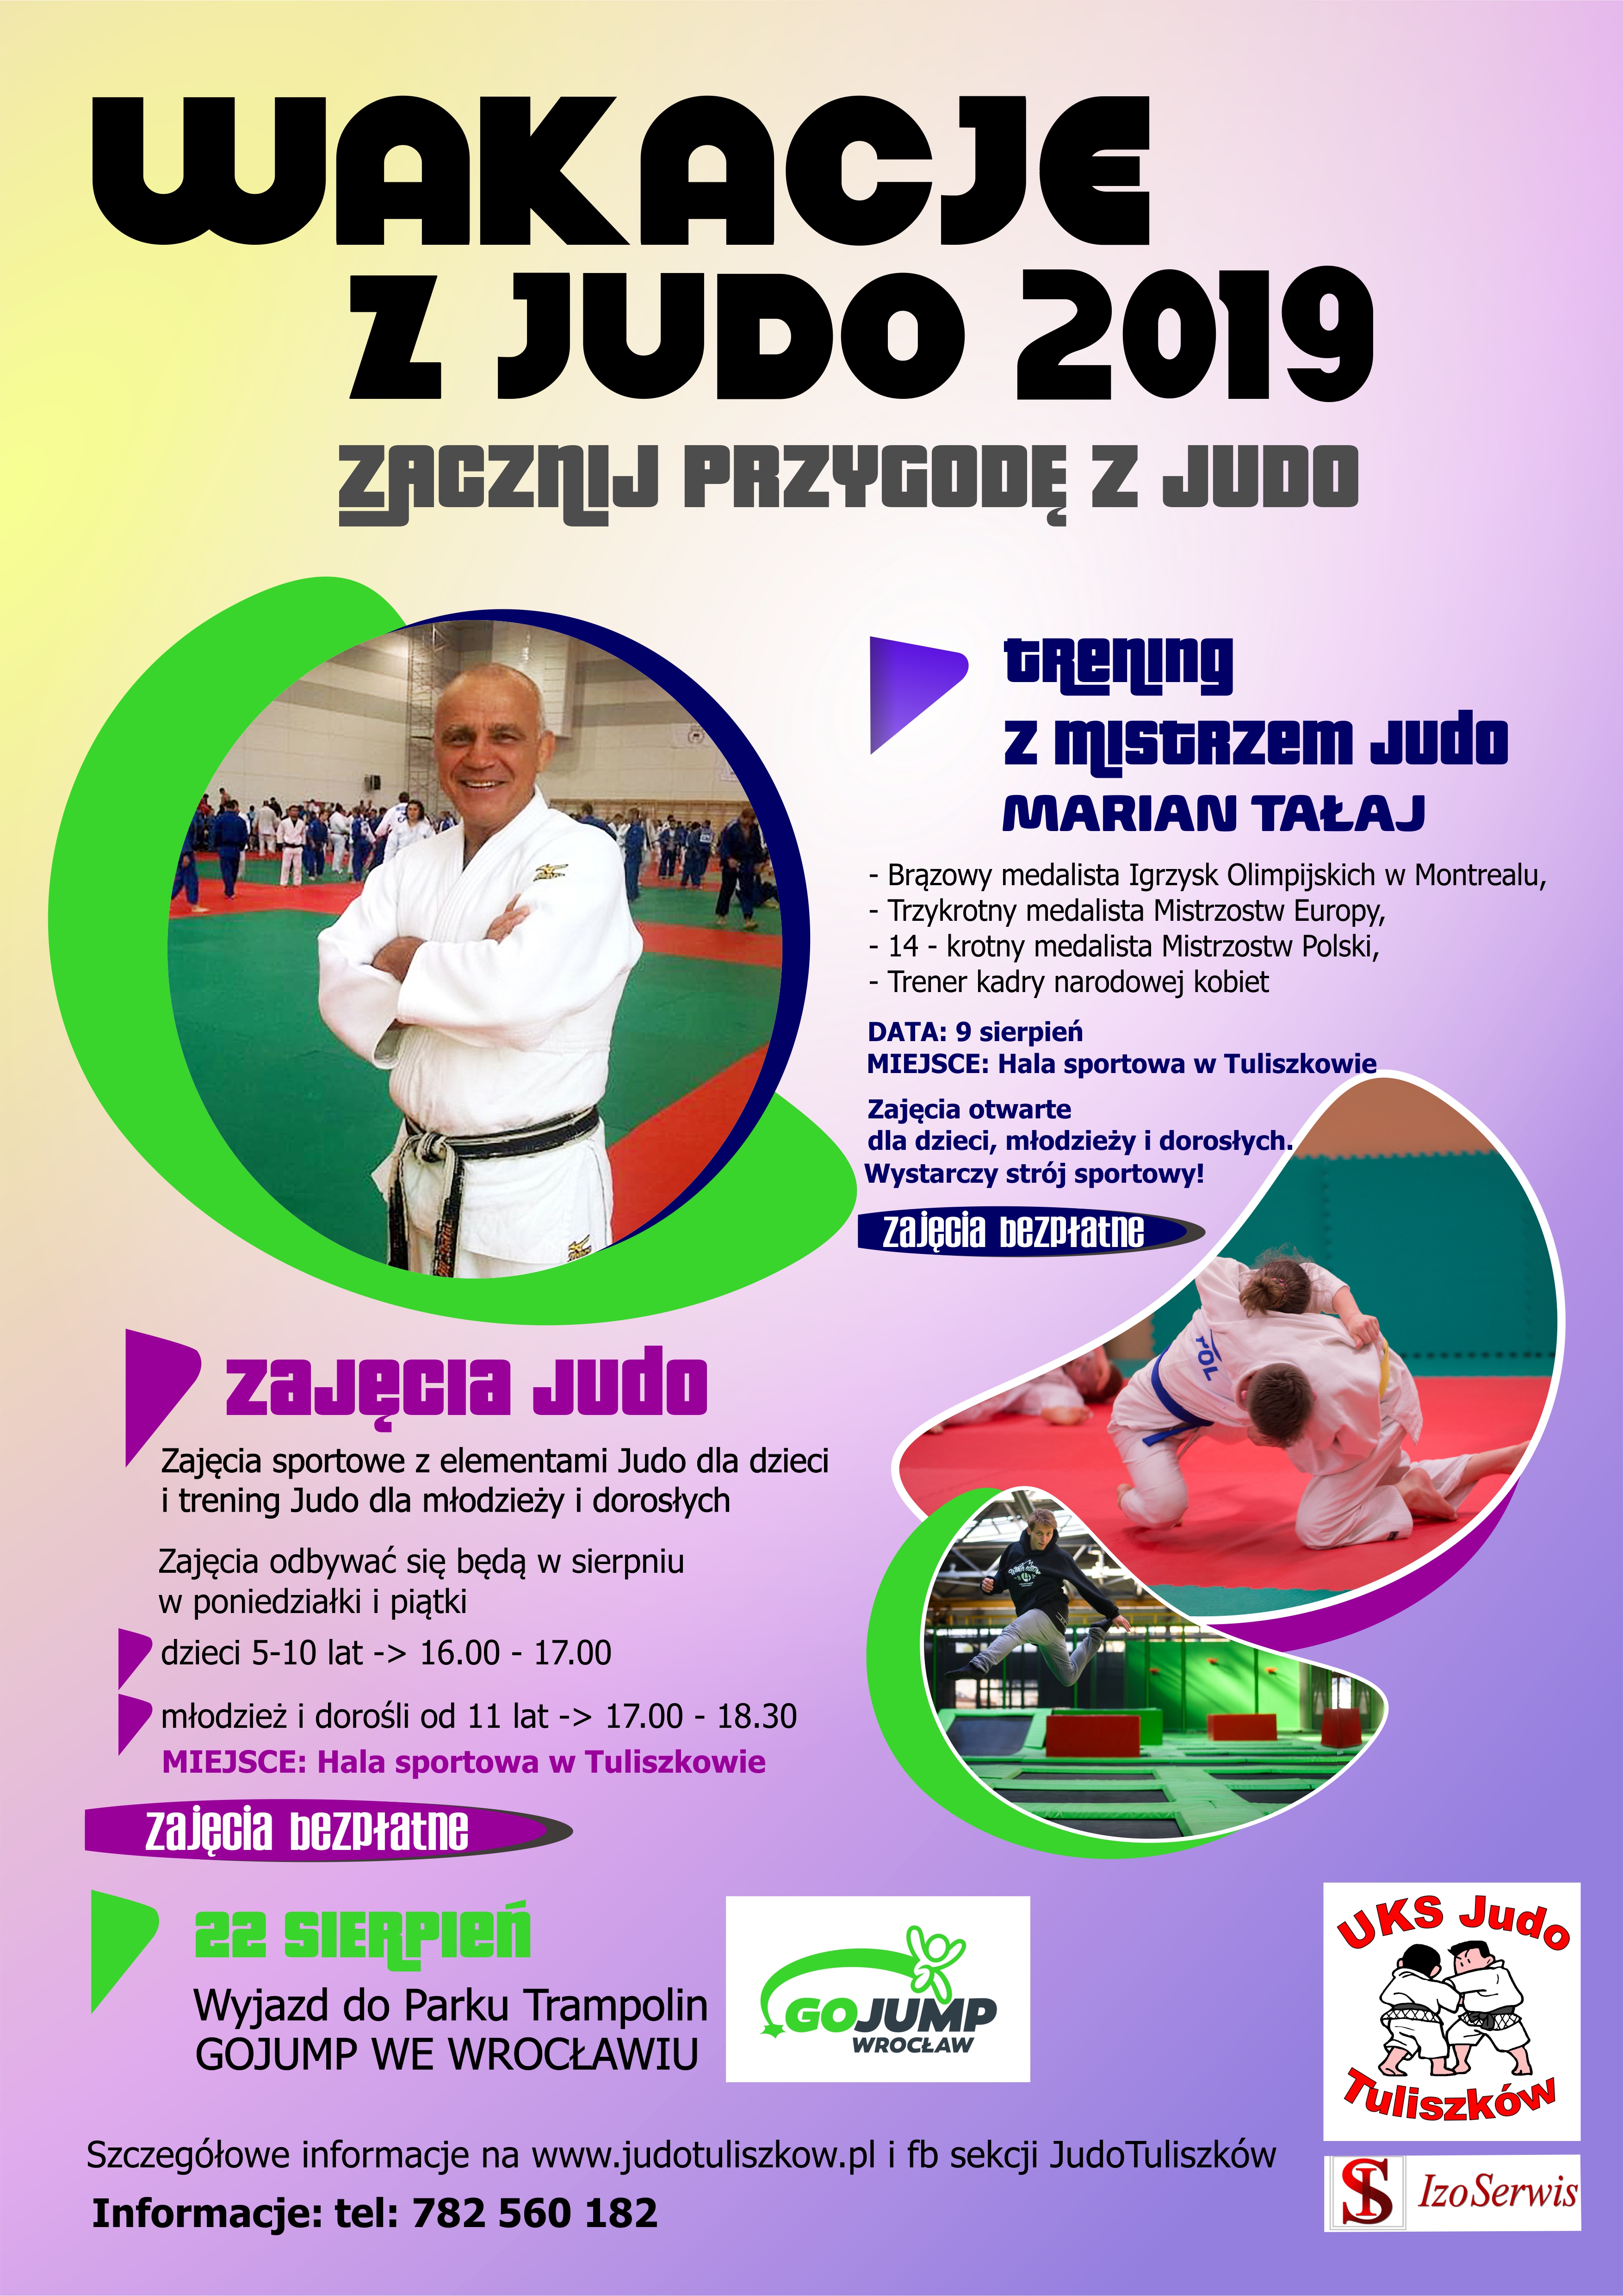 judo wakacje gaj 2019